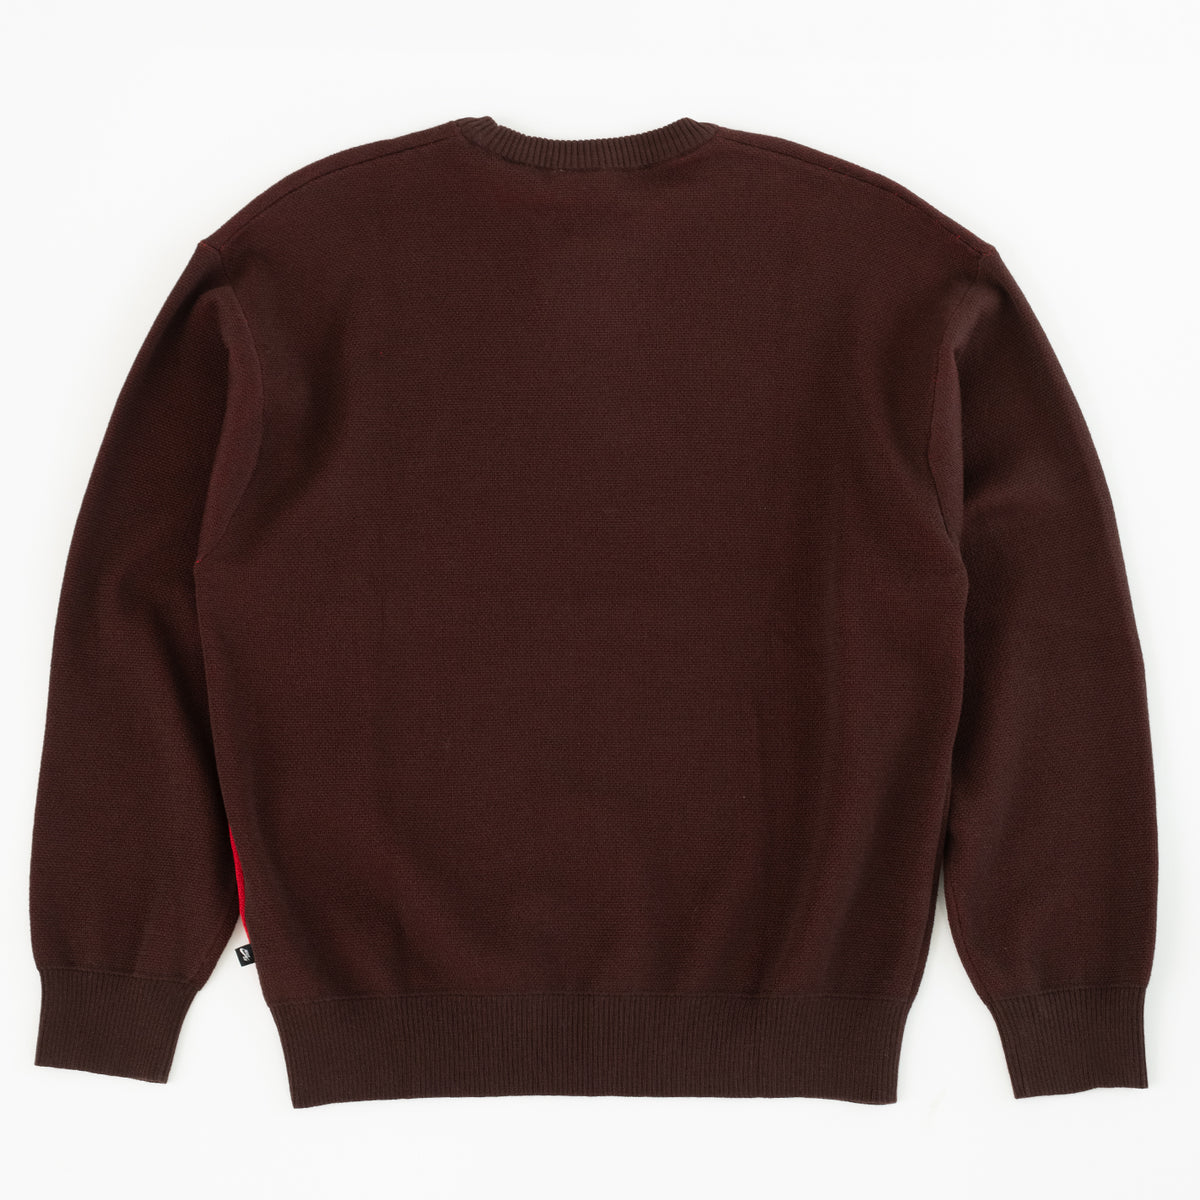 Crewneck Sweater (Earth)